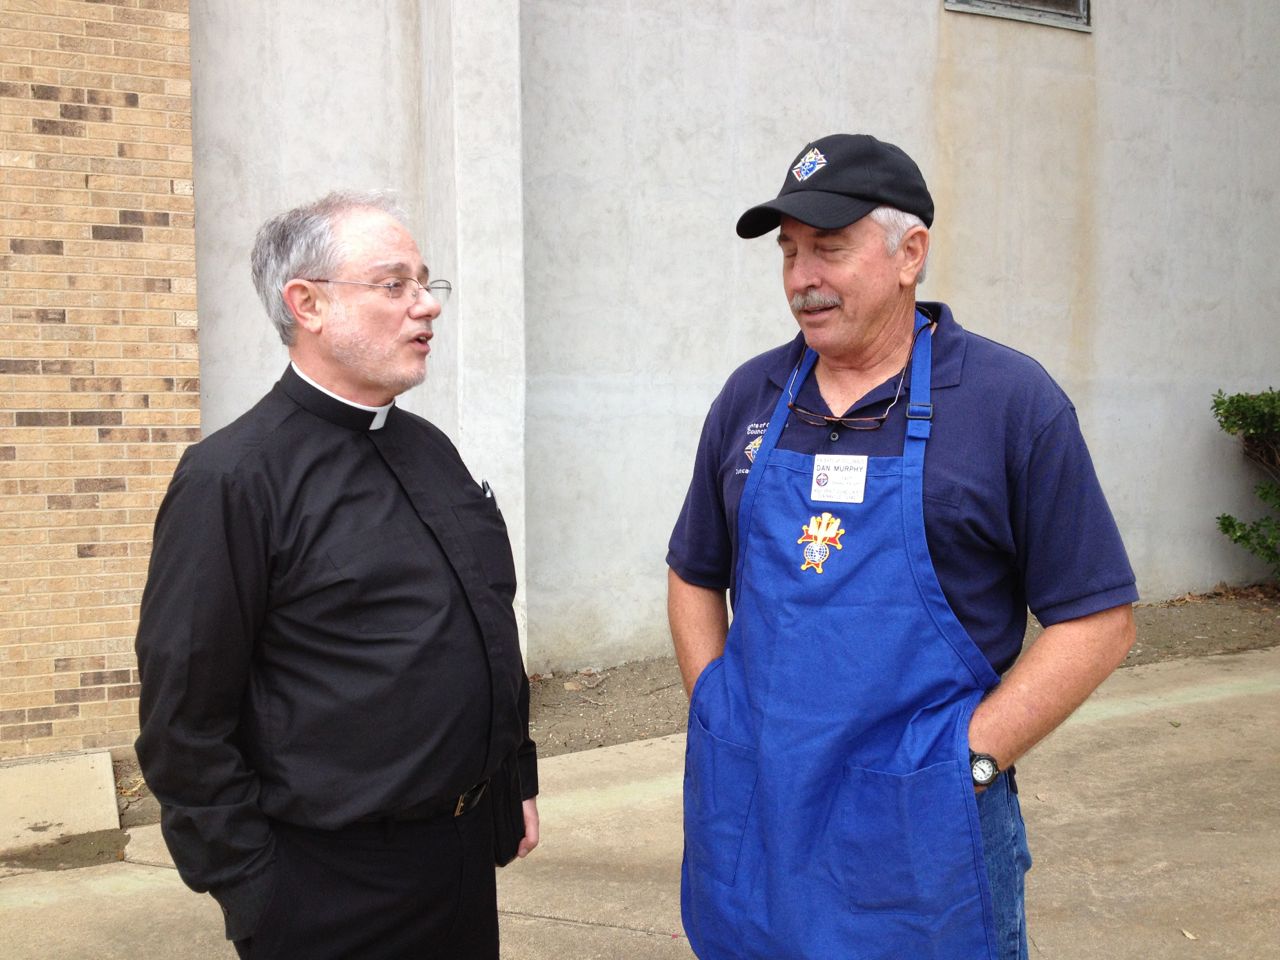 Dan Murphy, Community Director visits with Very Rev. Jim Swift, Rector of Holy Trinity Seminary